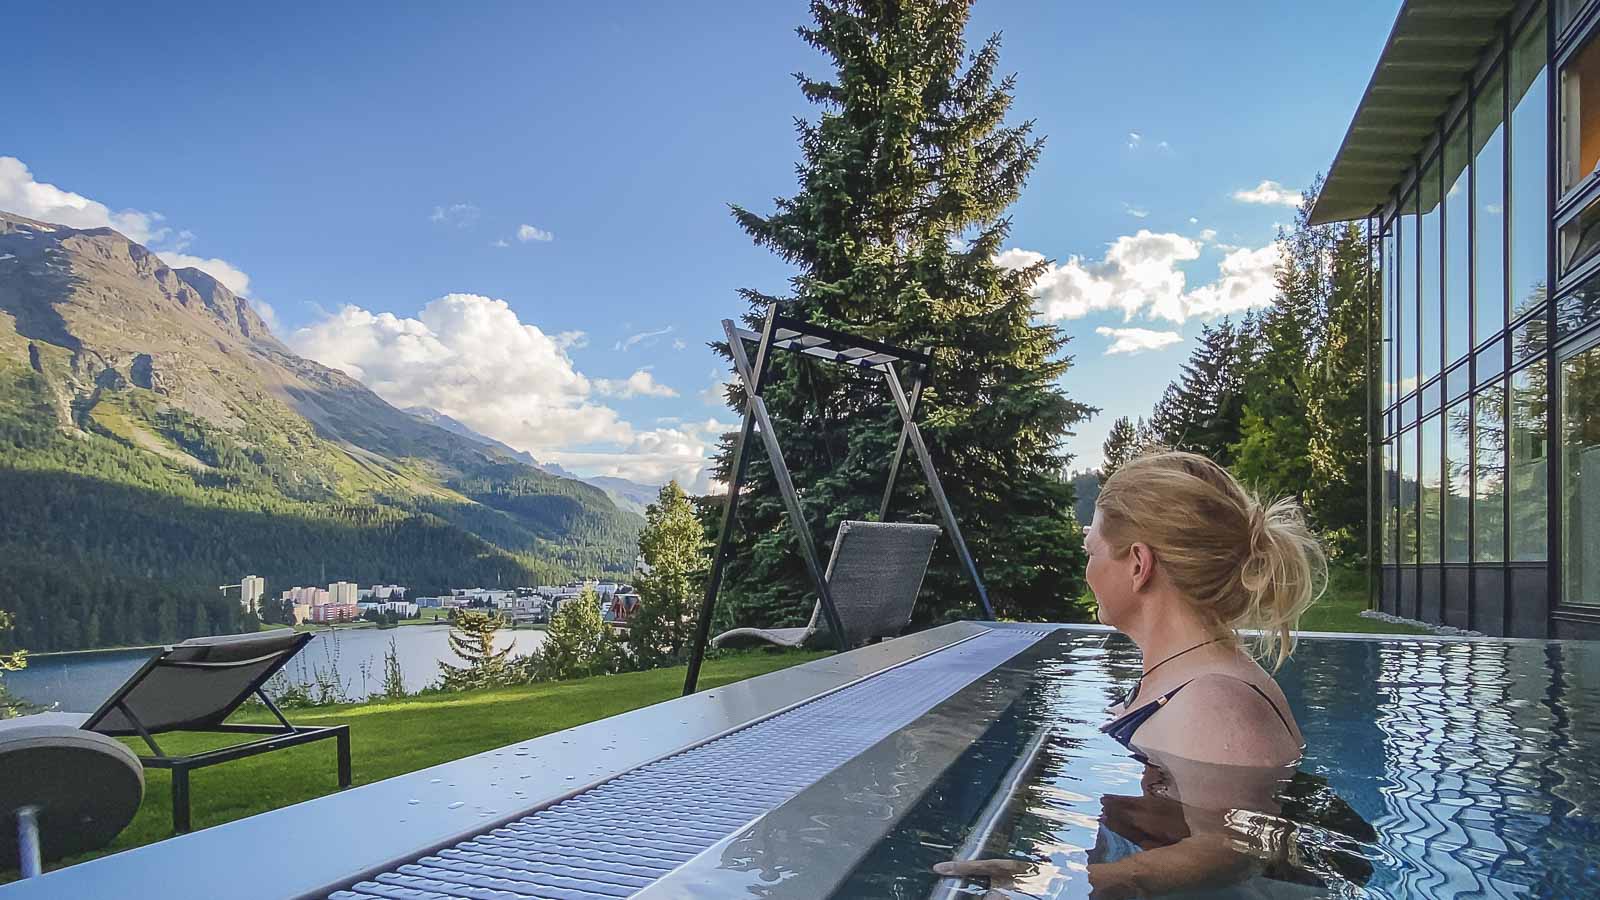 St Moritz Summer Fun In Switzerland The Planet D